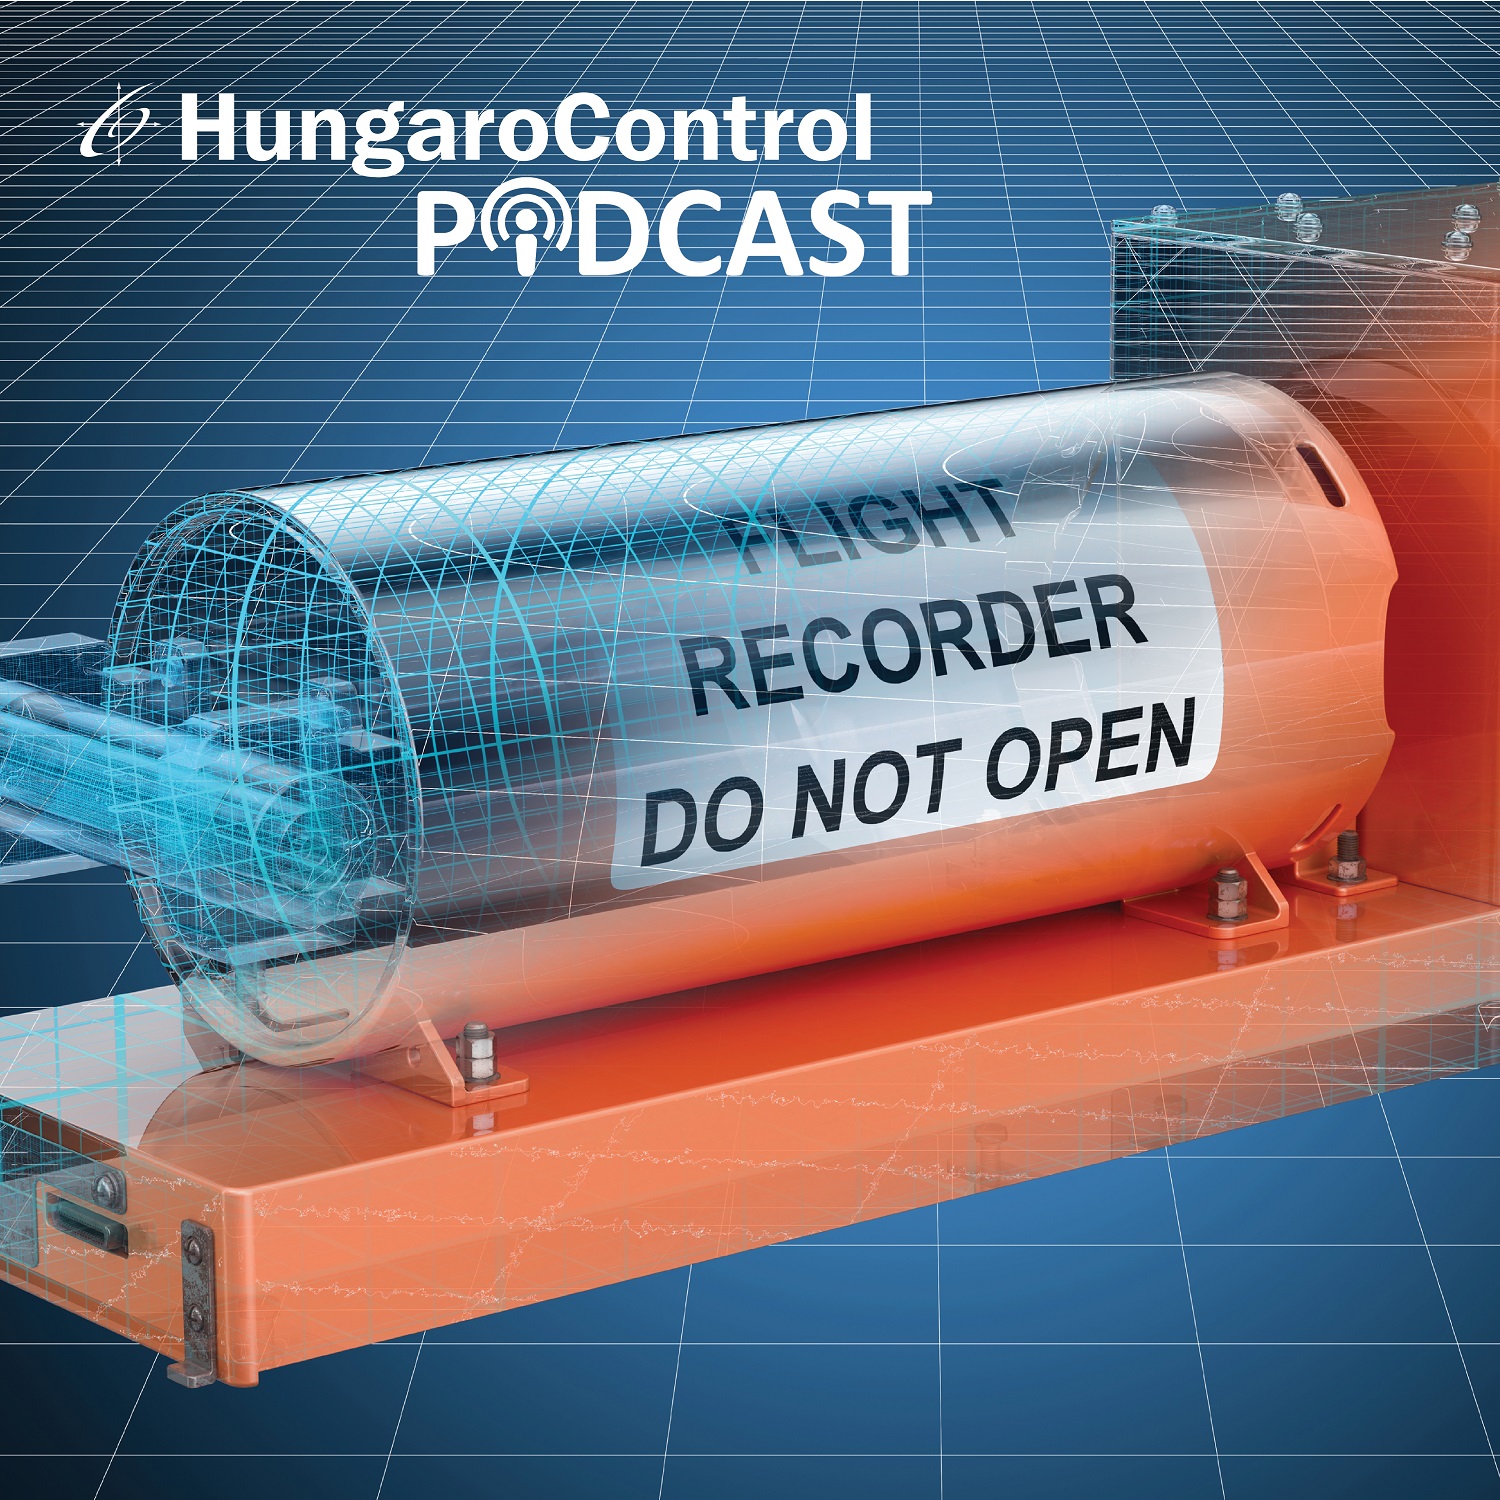 Artwork for podcast HungaroControl Podcast